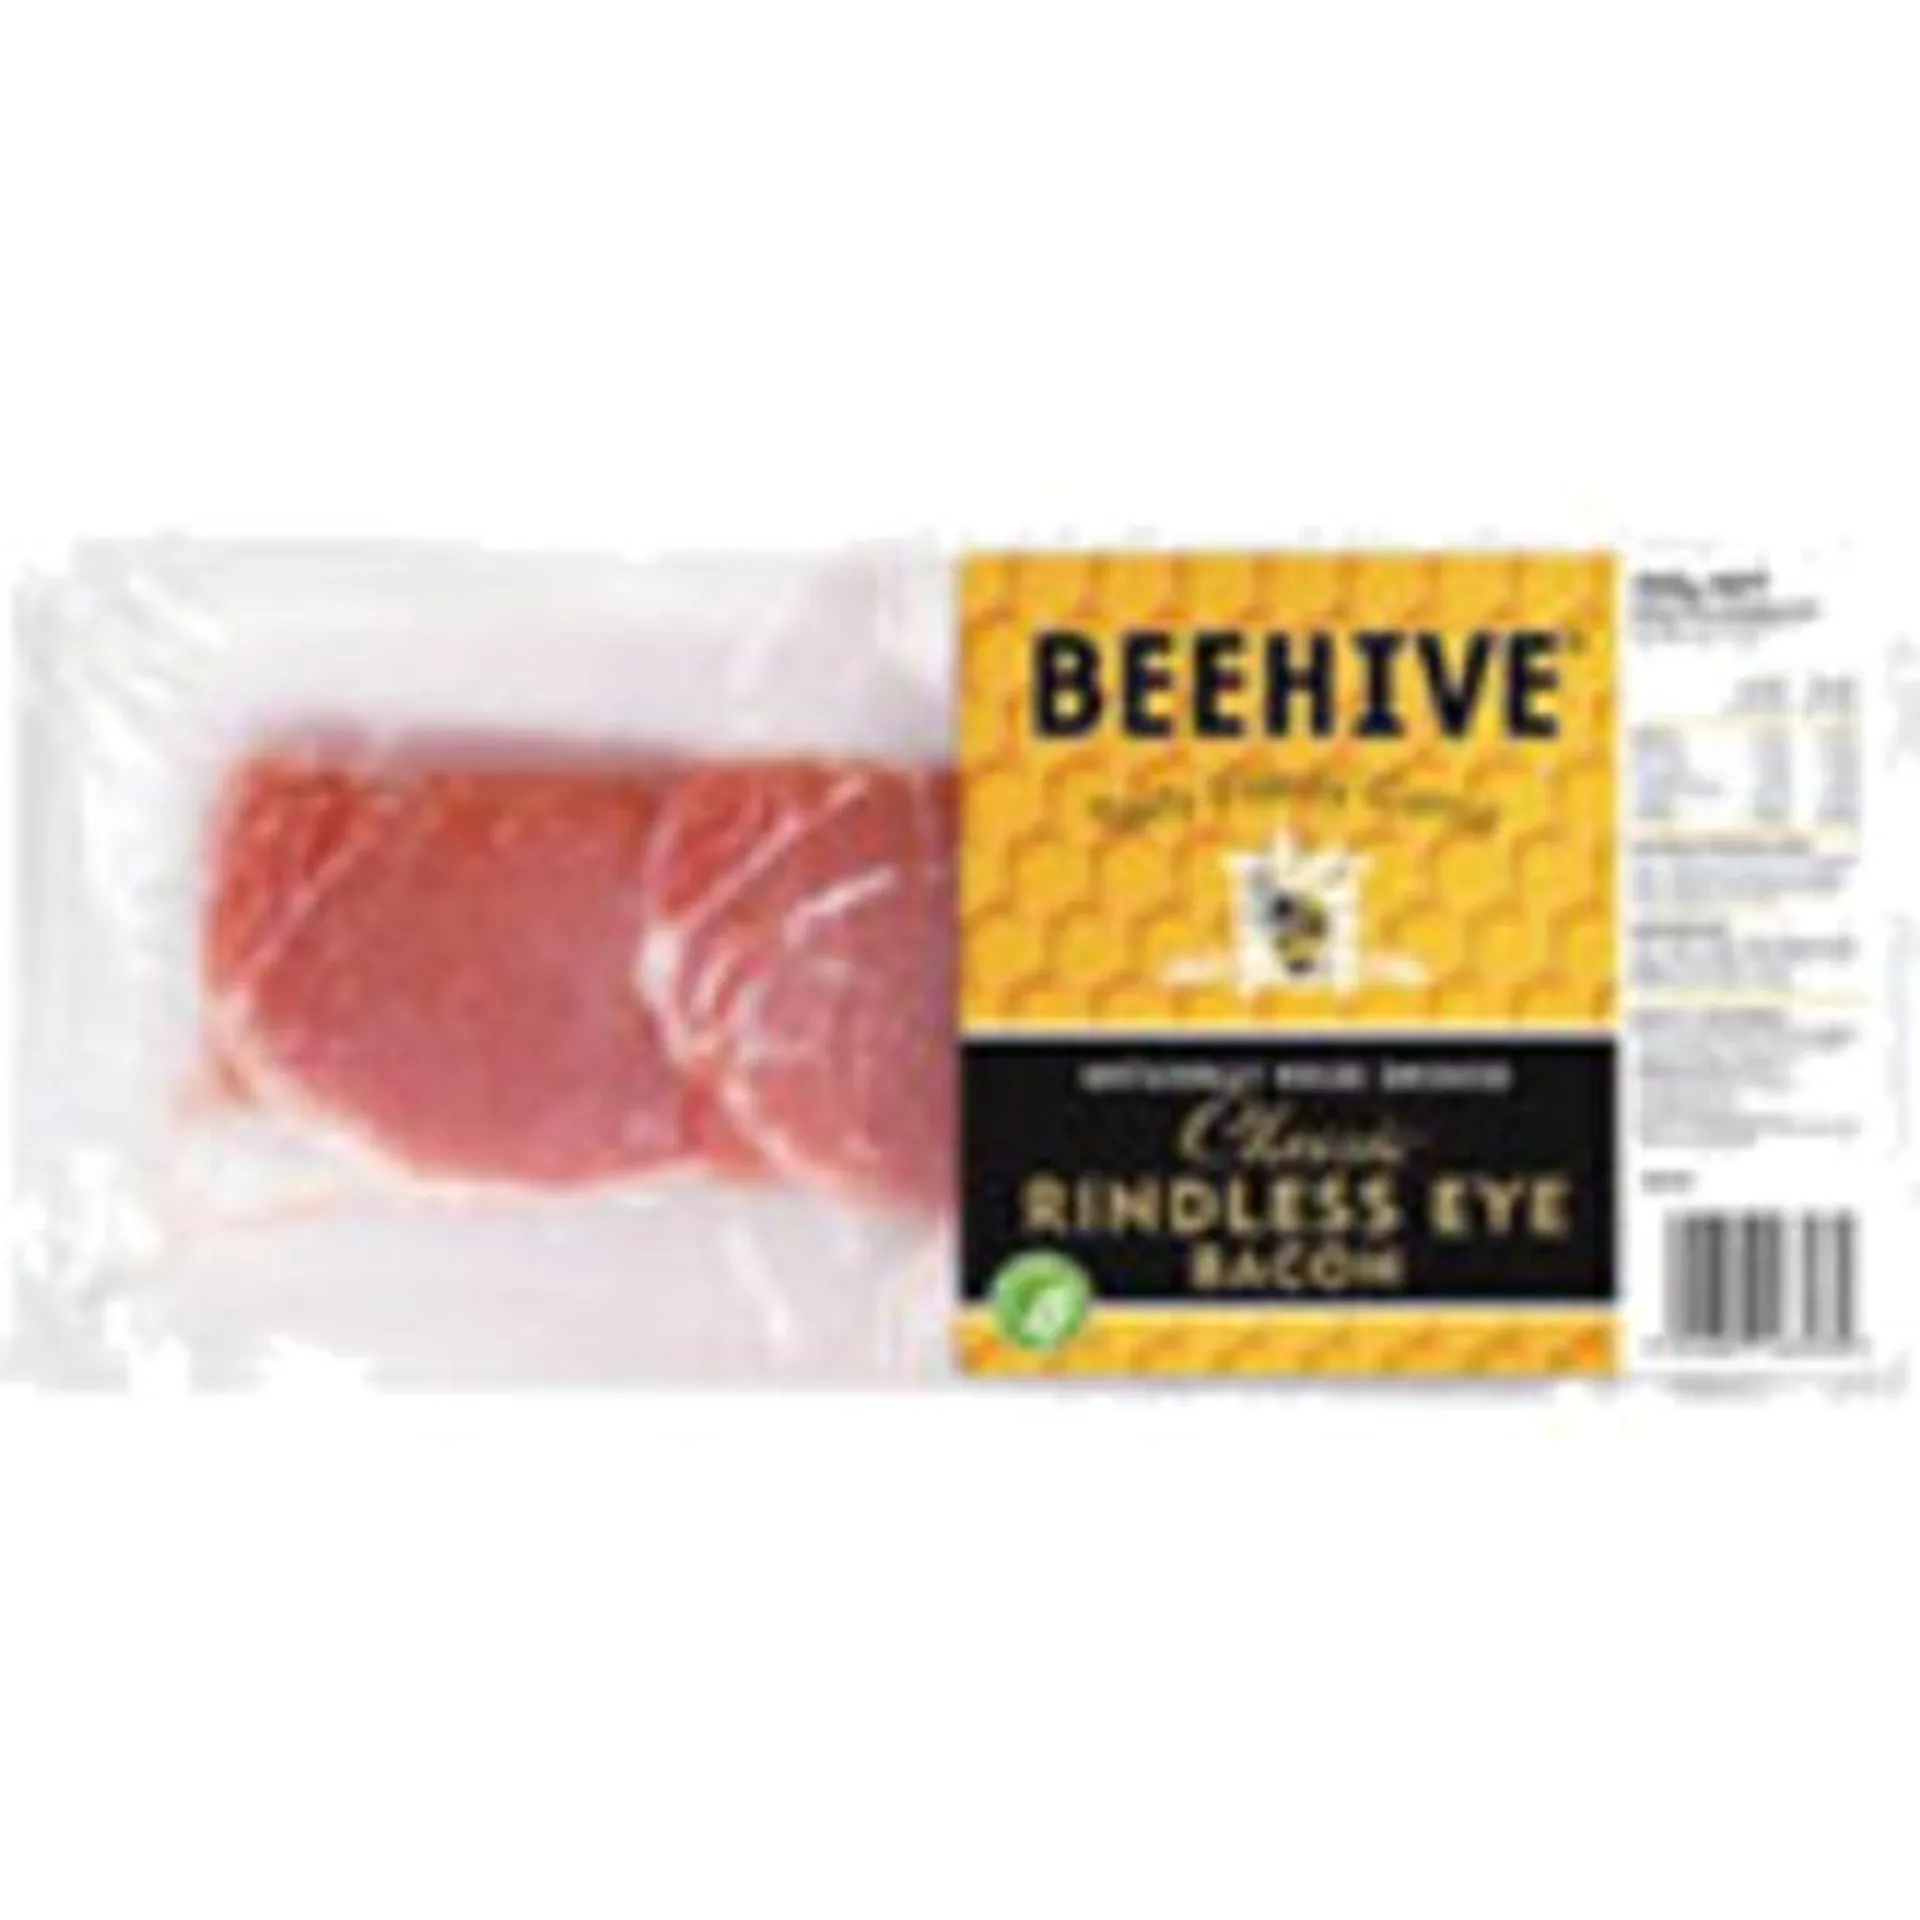 Beehive Bacon Rindless Eye 250g